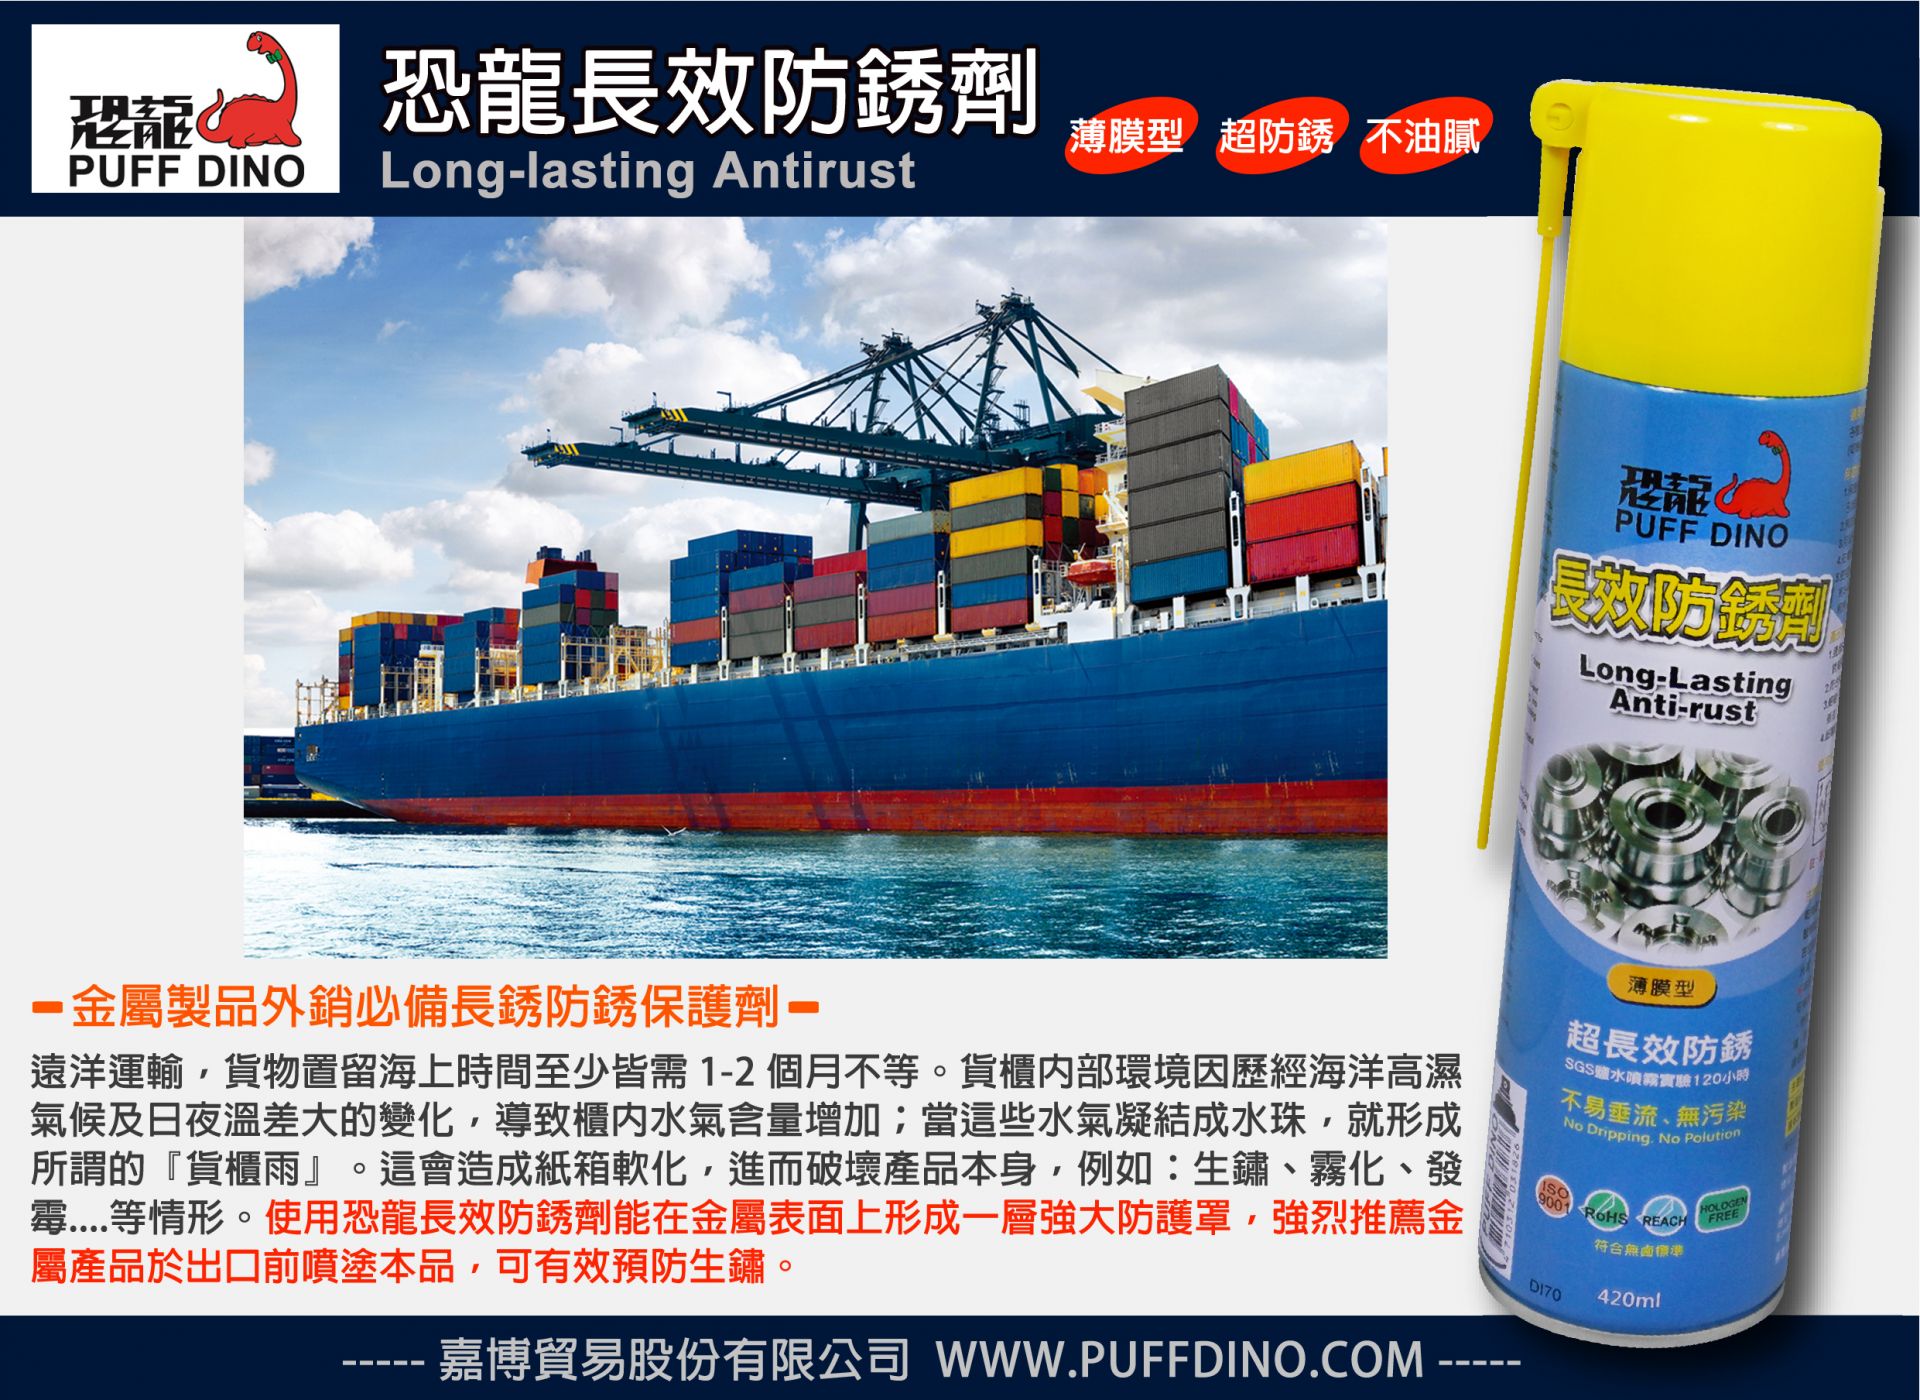 PUFF DINO Long Lasting Anti-Rust - Ocean Ship Application